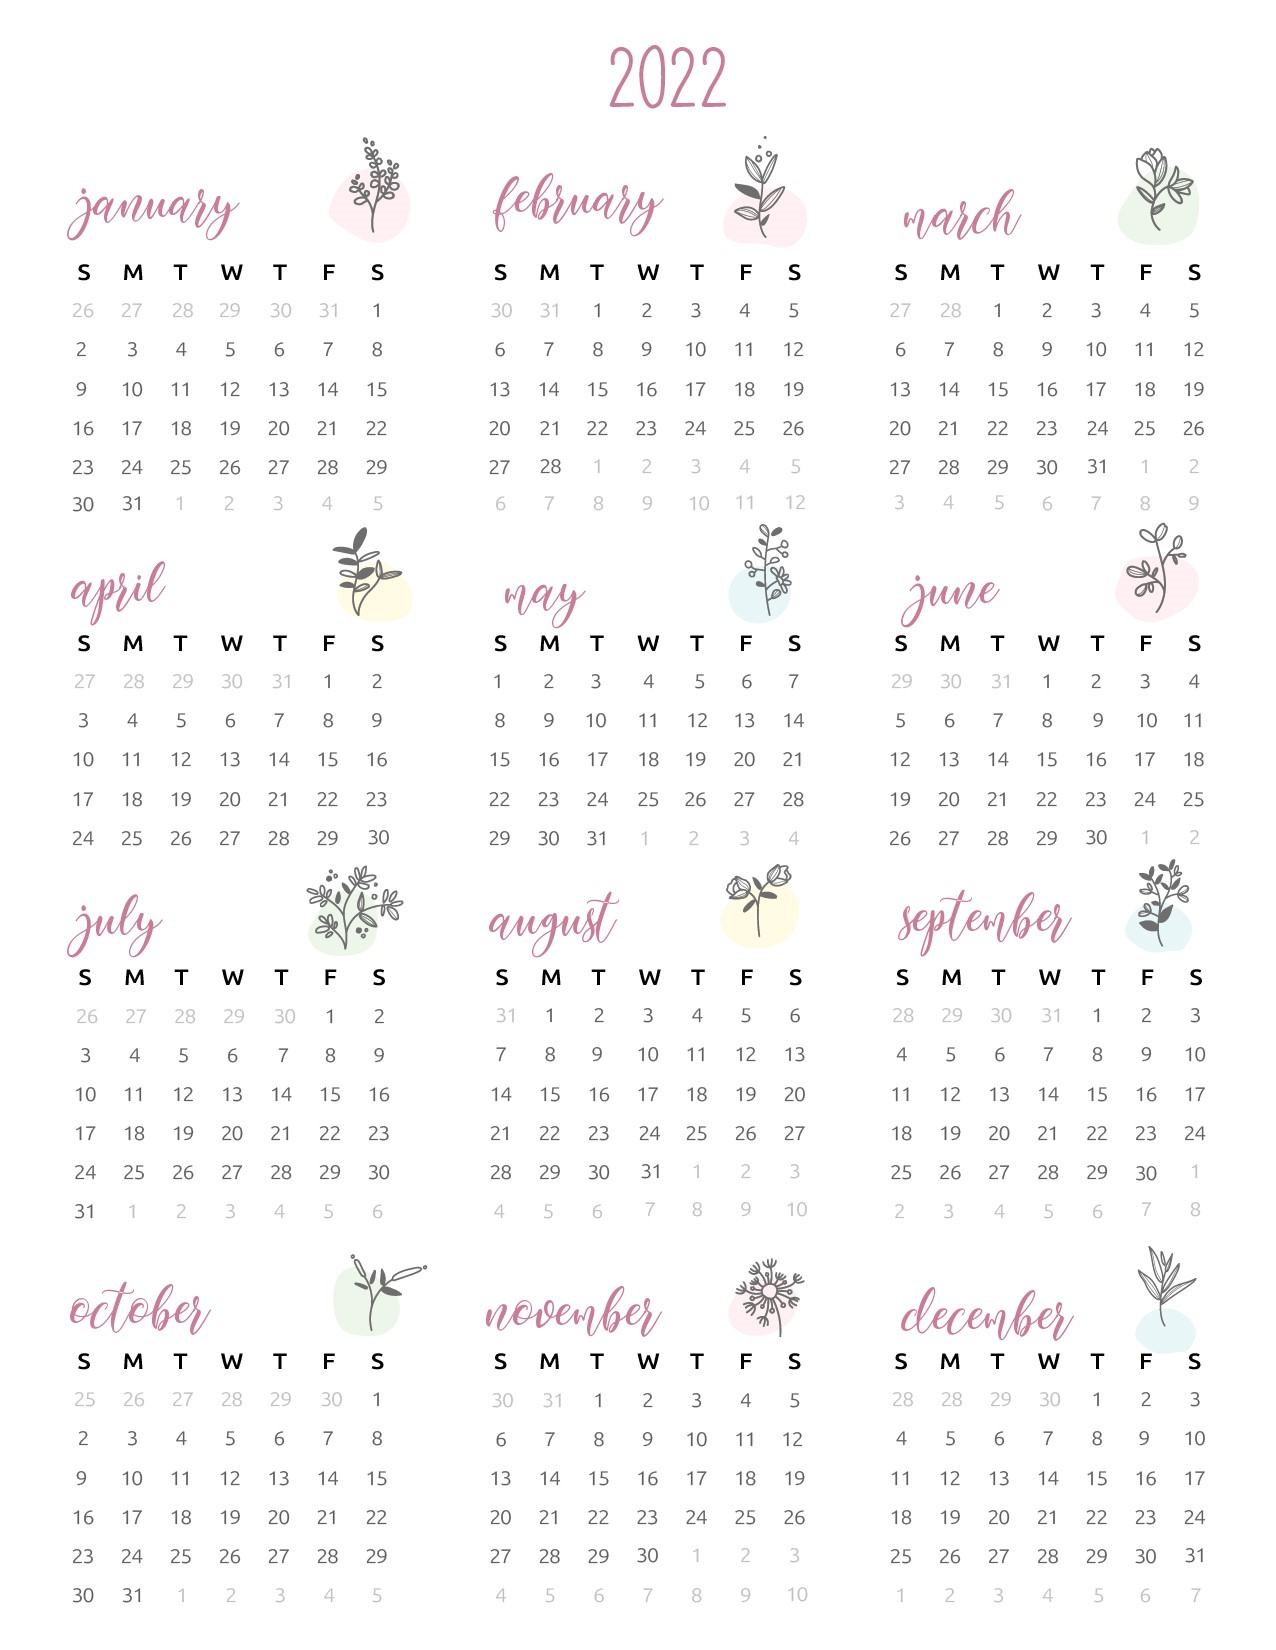 2022 Calendar Printable One Page - 2022 Holiday Calendar